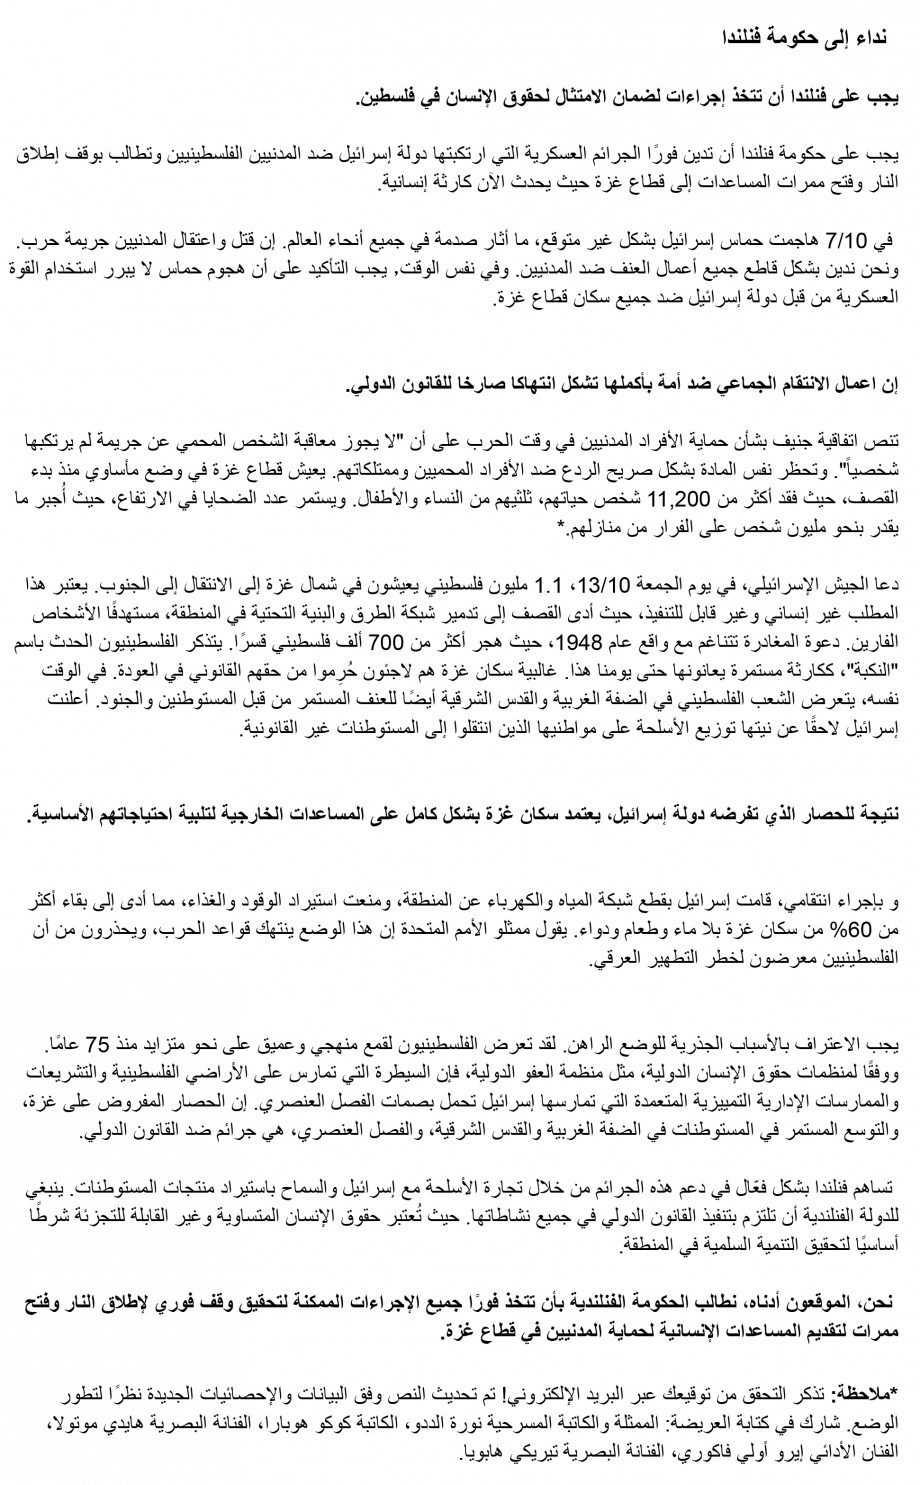 Petition_Arabic_translation-1-1.jpg